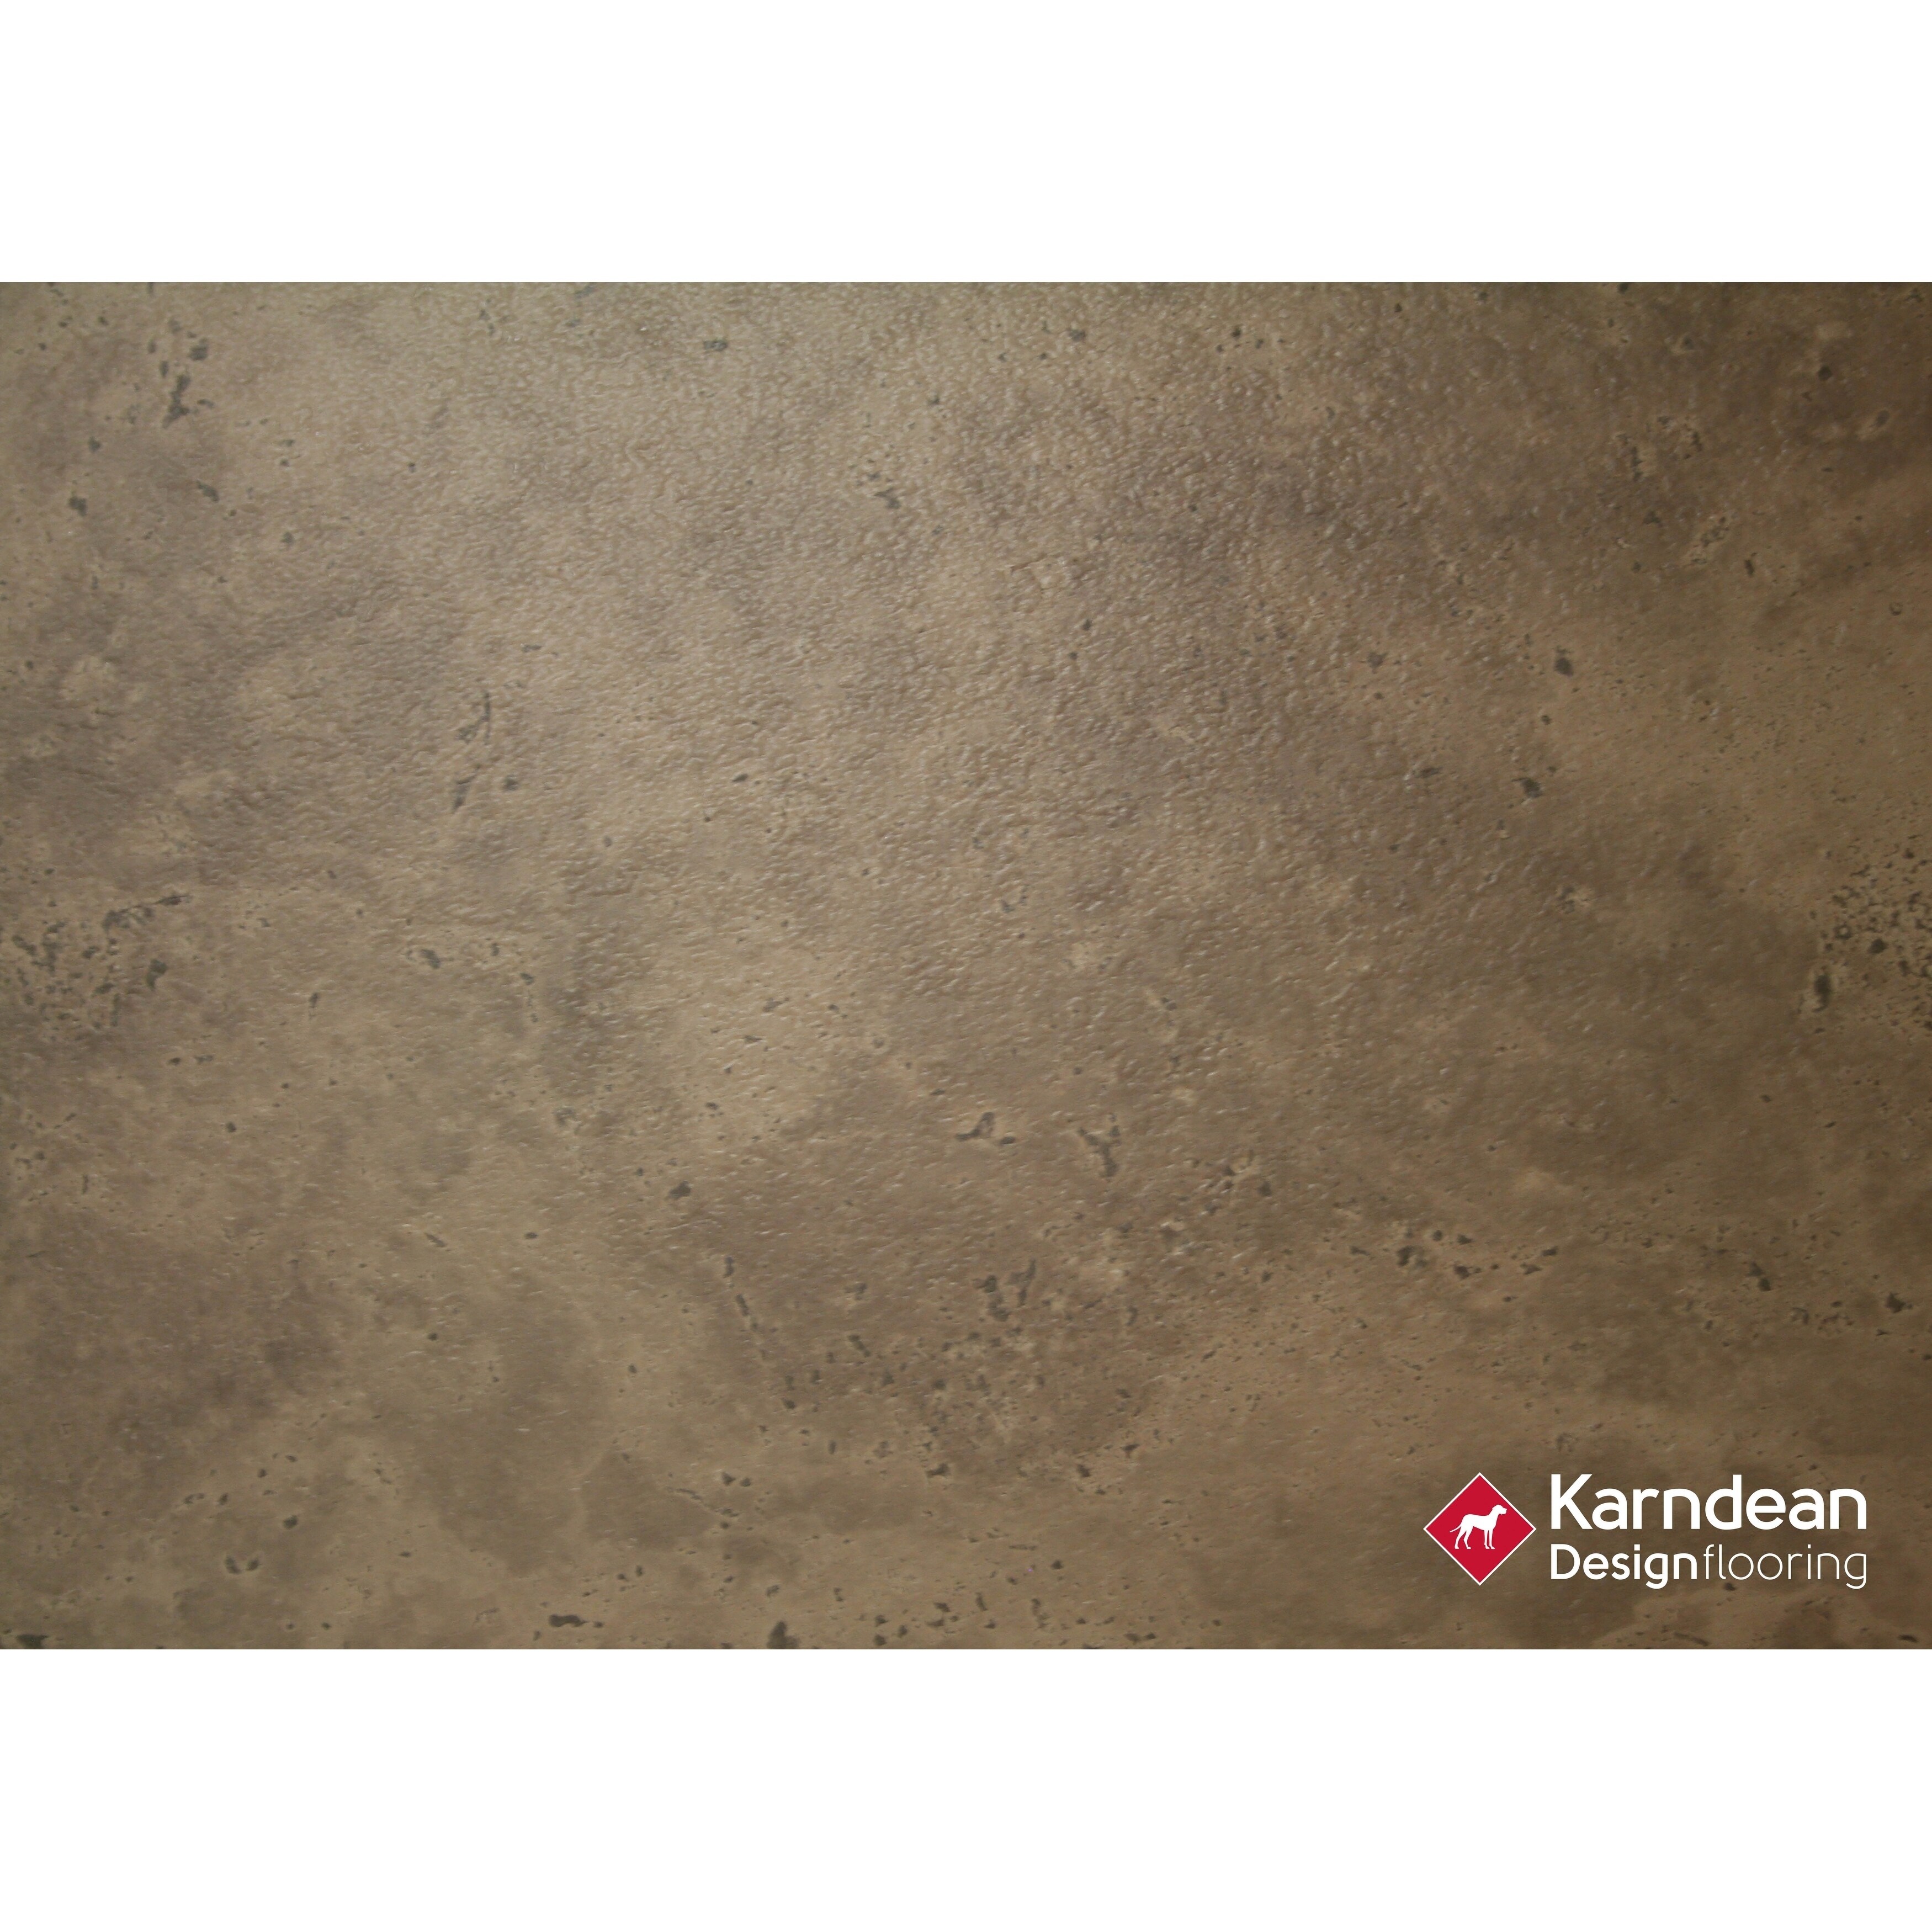 Canaletto by Karndean Designflooring - Beach Sand Oak Pet Friendly,  Waterproof Gluedown LVT - Bed Bath & Beyond - 26260589